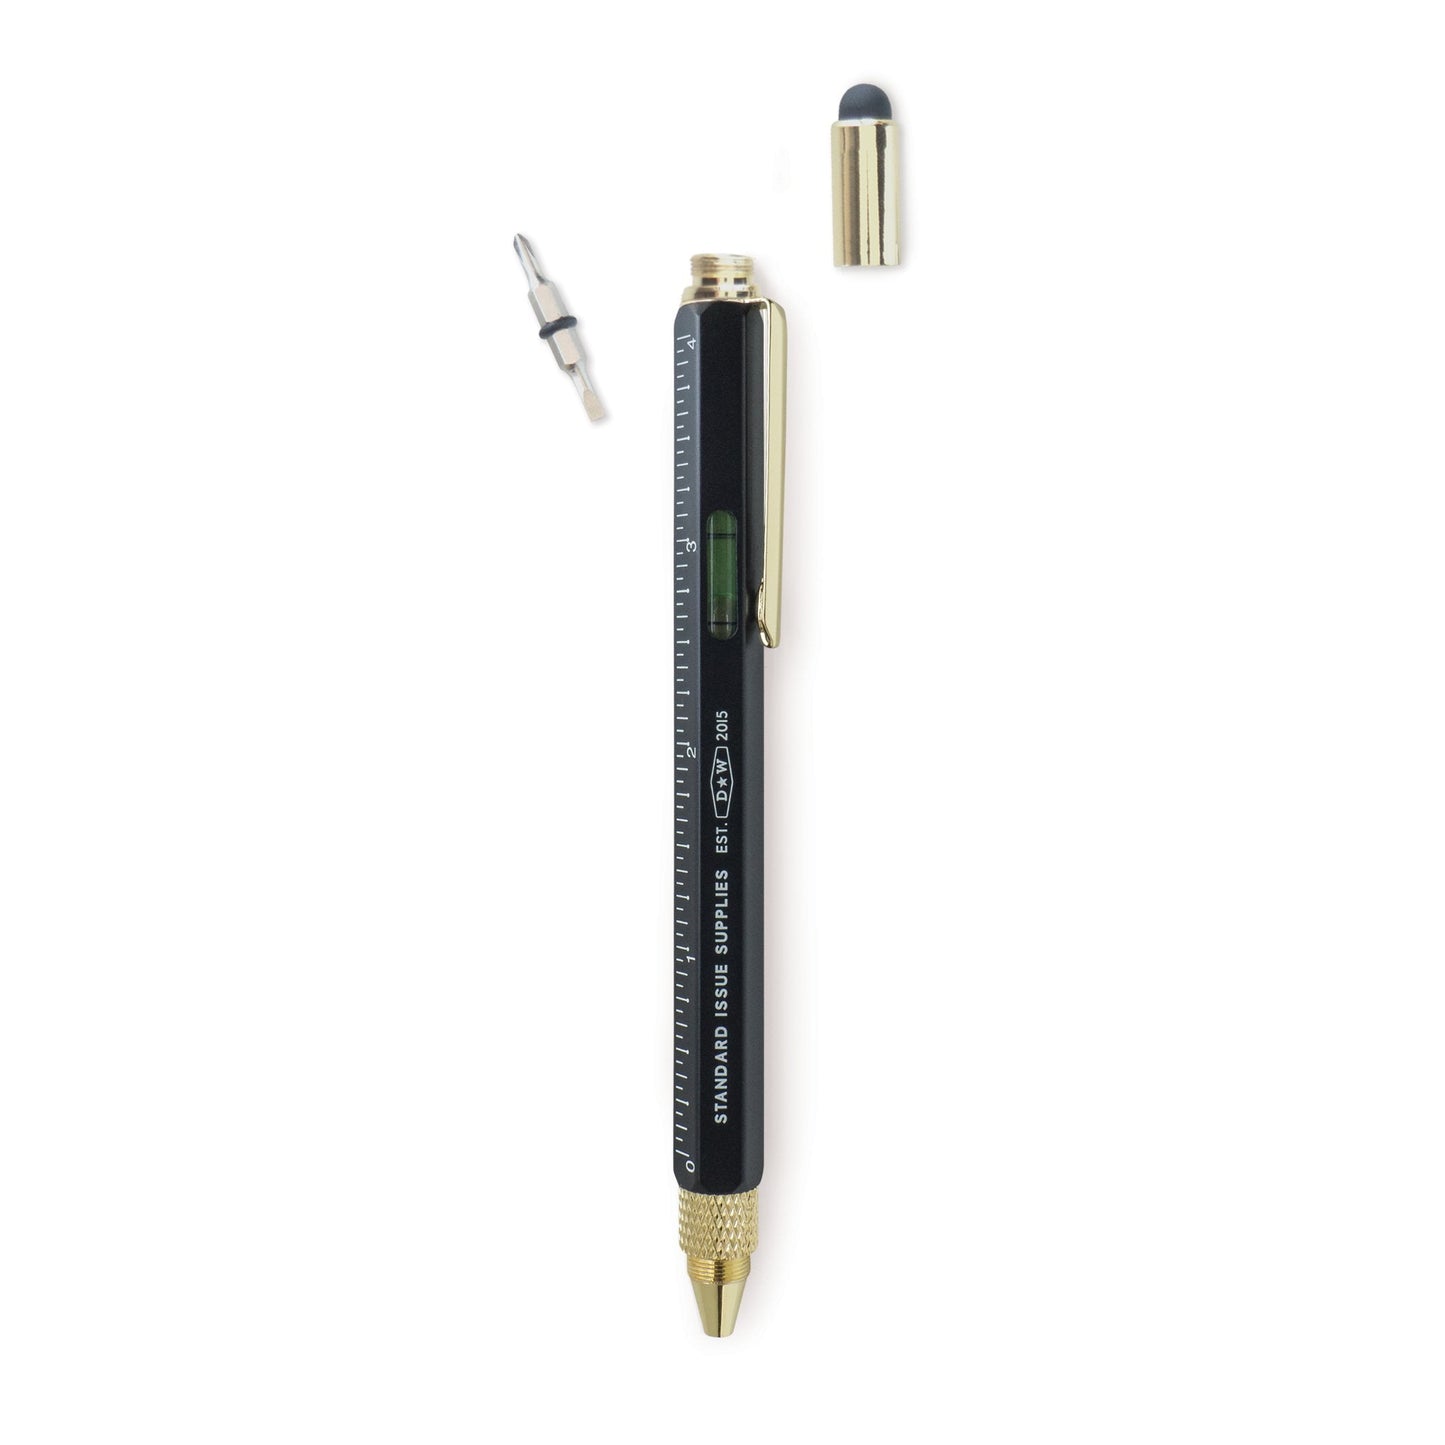 Black 6-in-1 Multi-Tool Pen